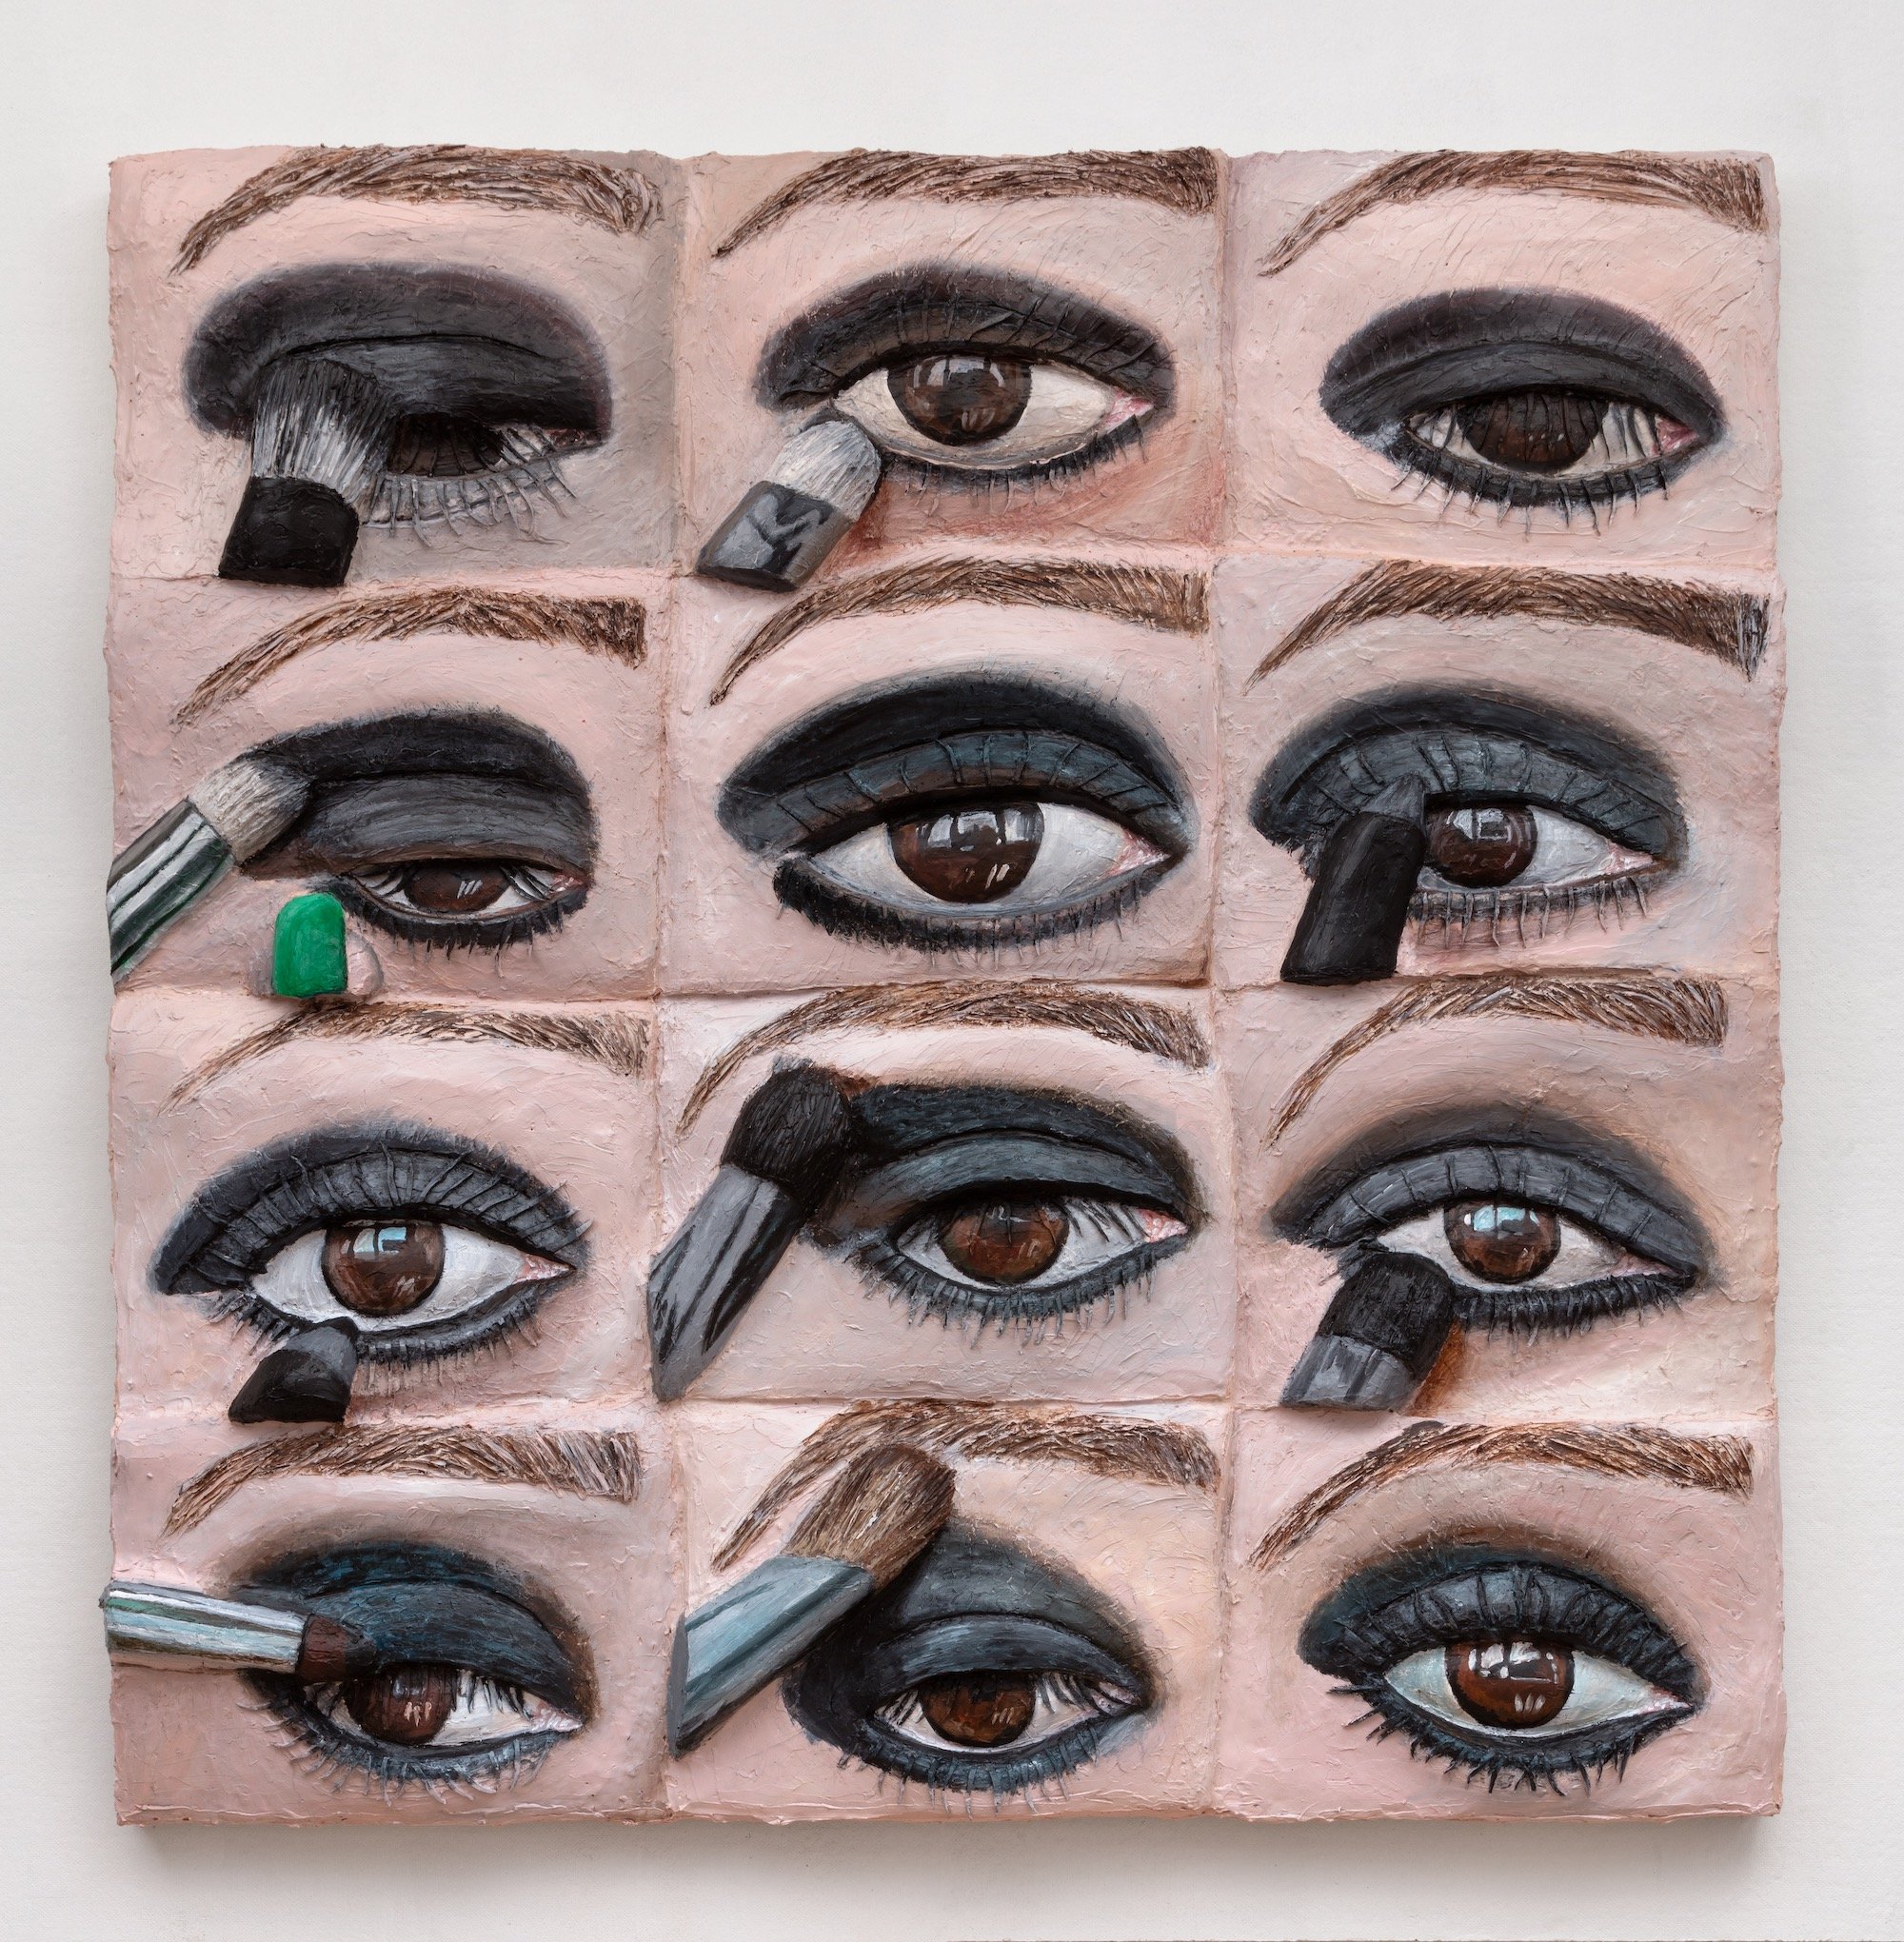 Gina Beavers Dramatic Eye 72 x 72 in Acrylic on linen on panel 2019 high res.jpeg